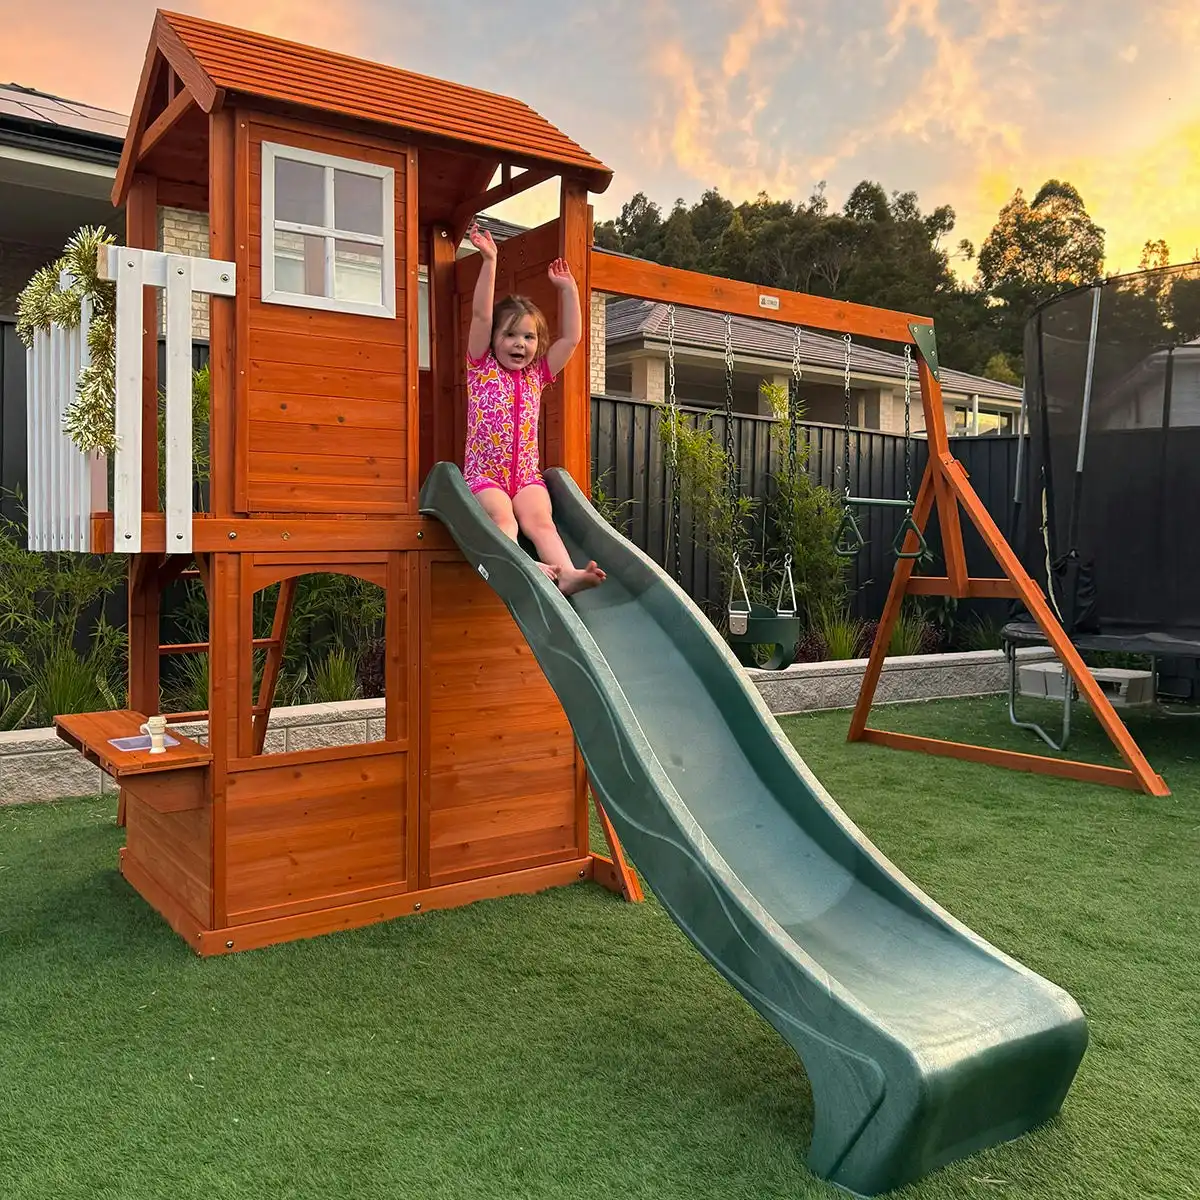 Lifespan Kids Springlake Play Centre in Green Slide